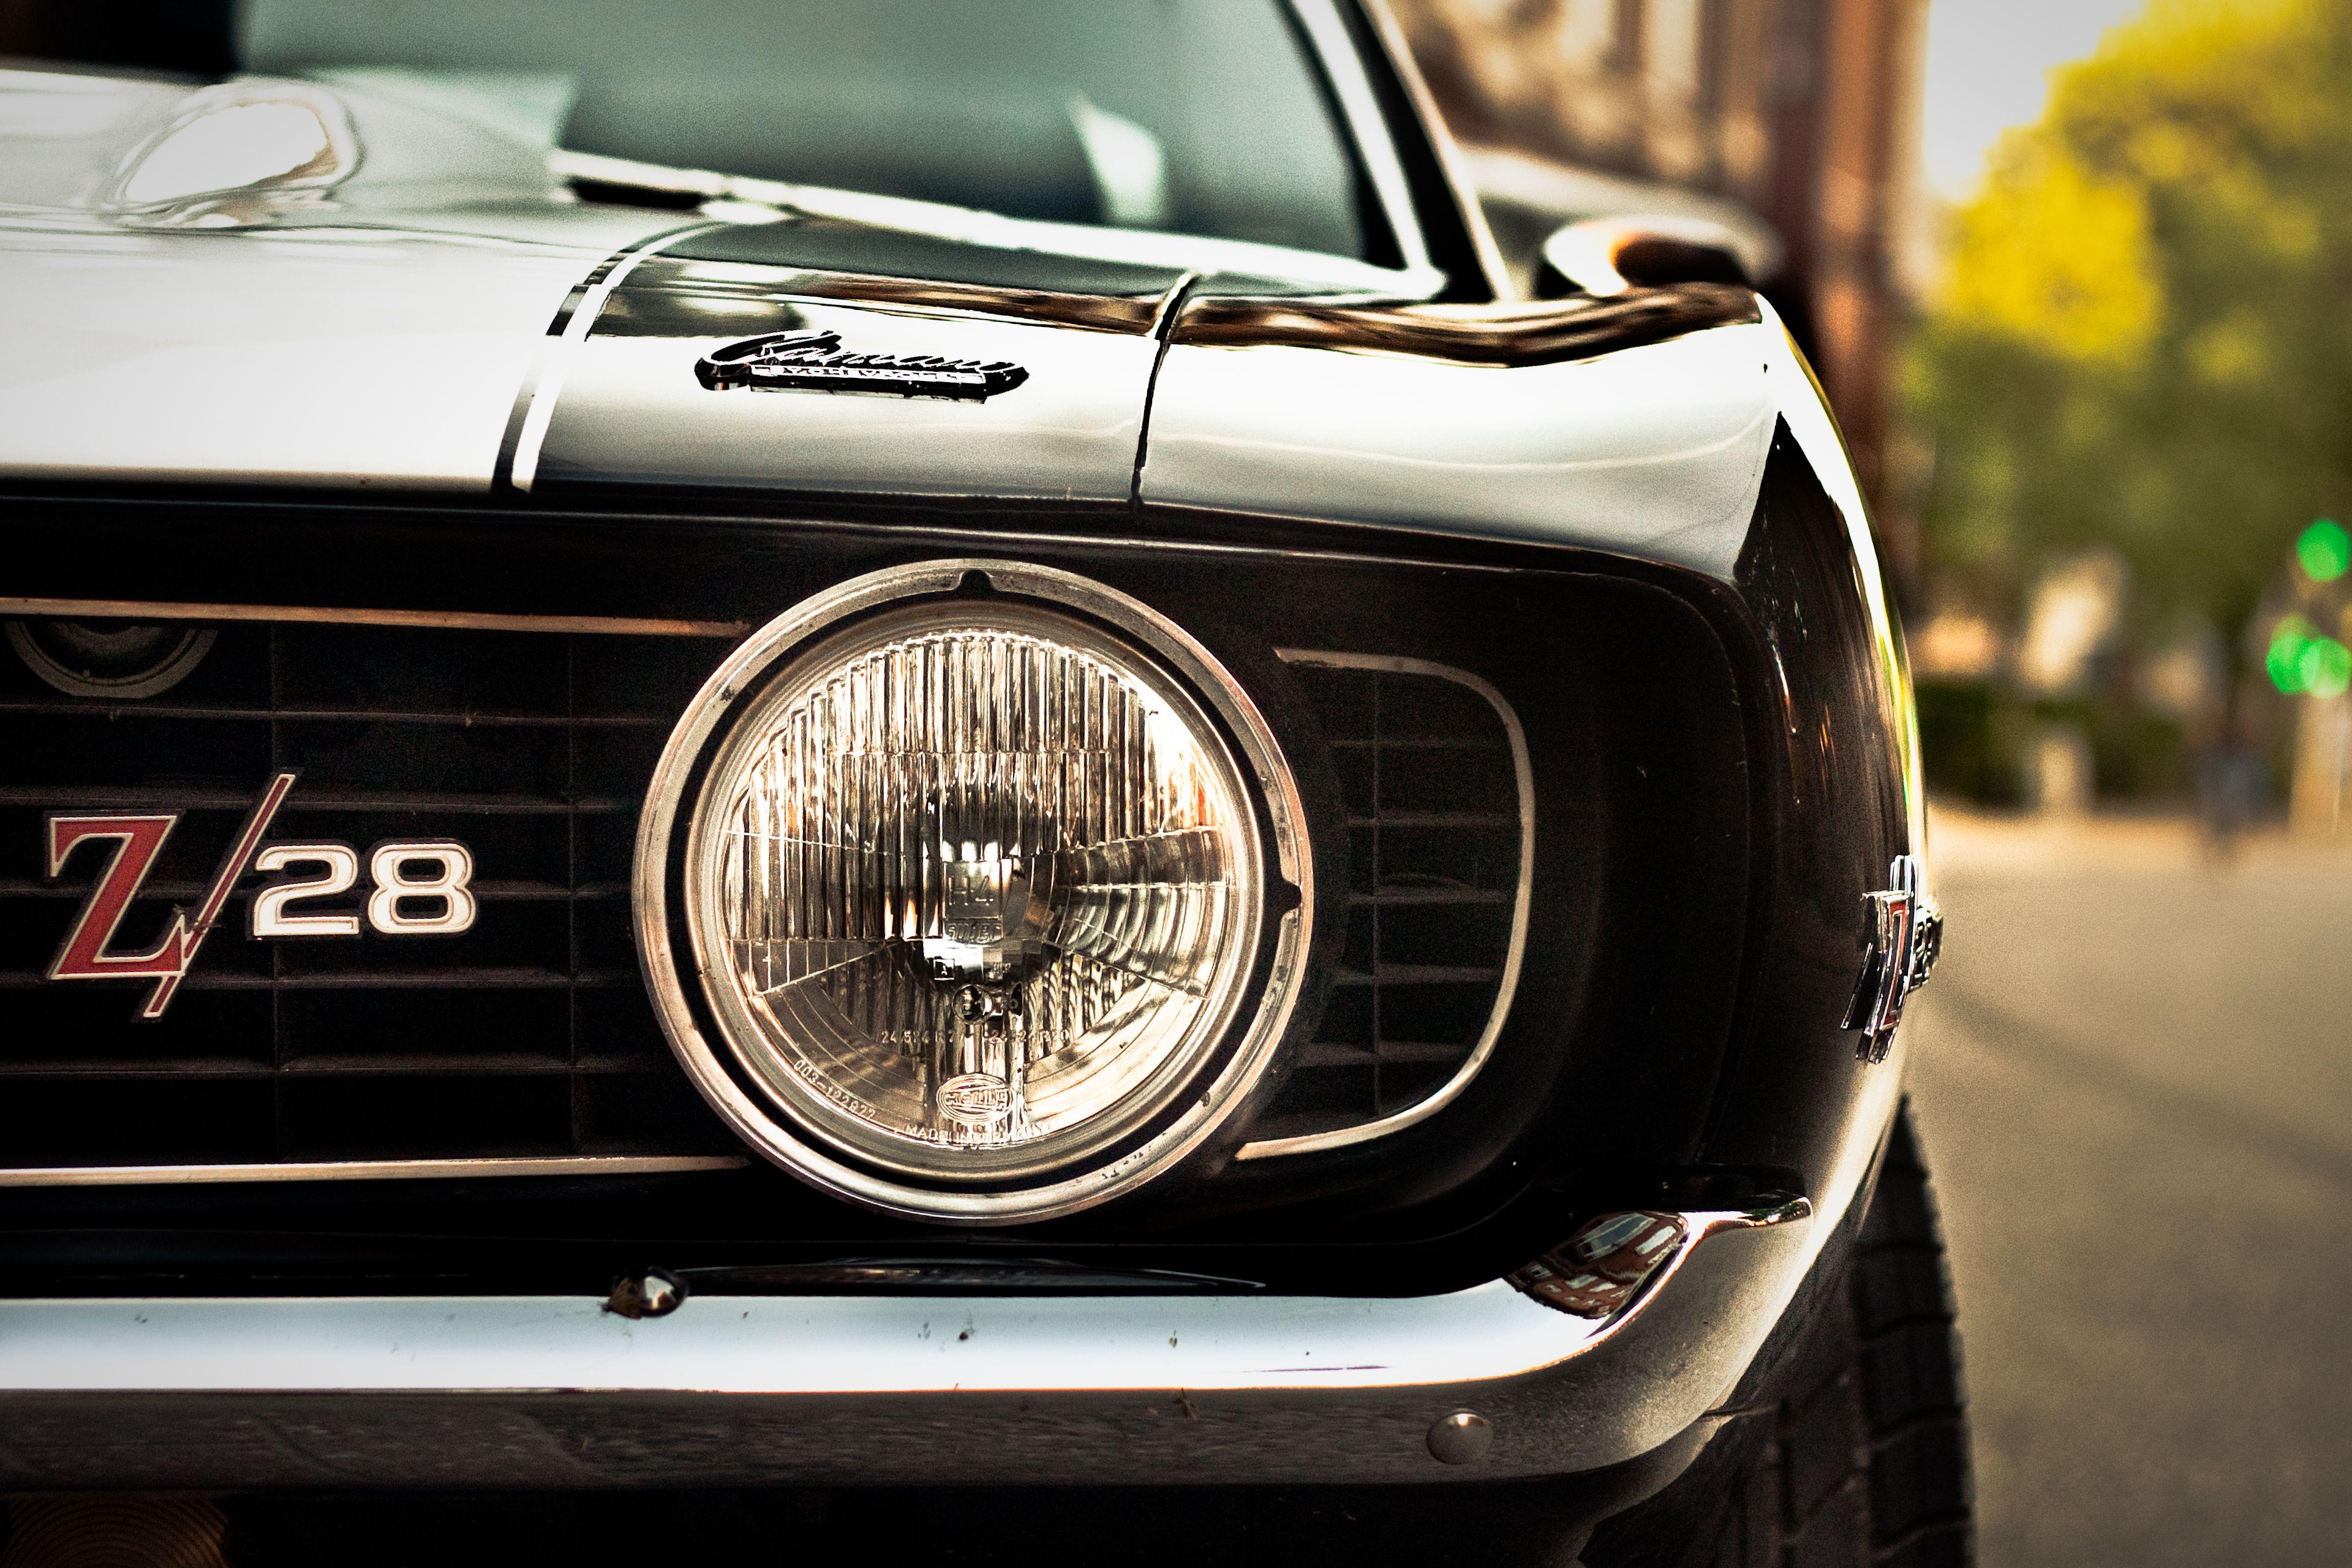 69 Camaro Wallpapers - Top Free 69 Camaro Backgrounds ...